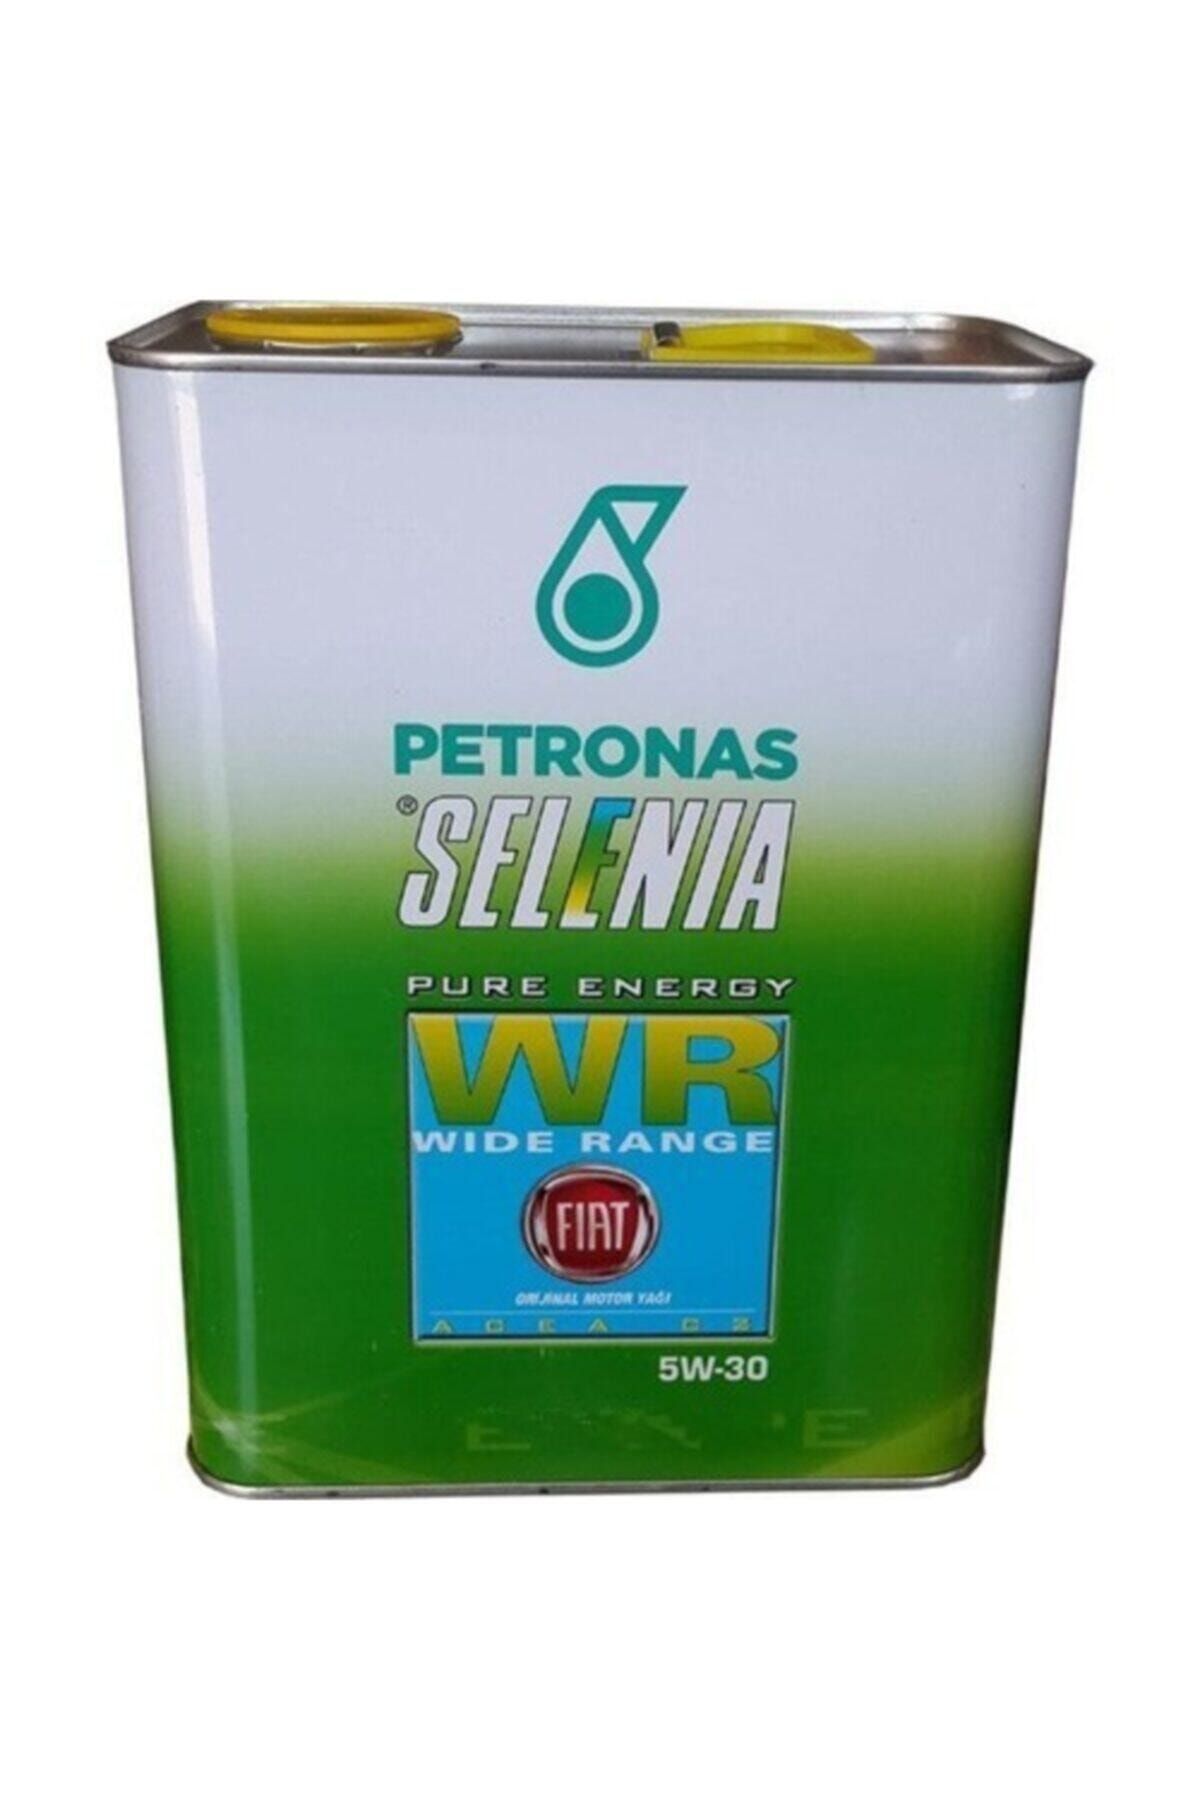 Petronas Selenia 5w30 3.2 Litre(PARTİKÜLLÜ)